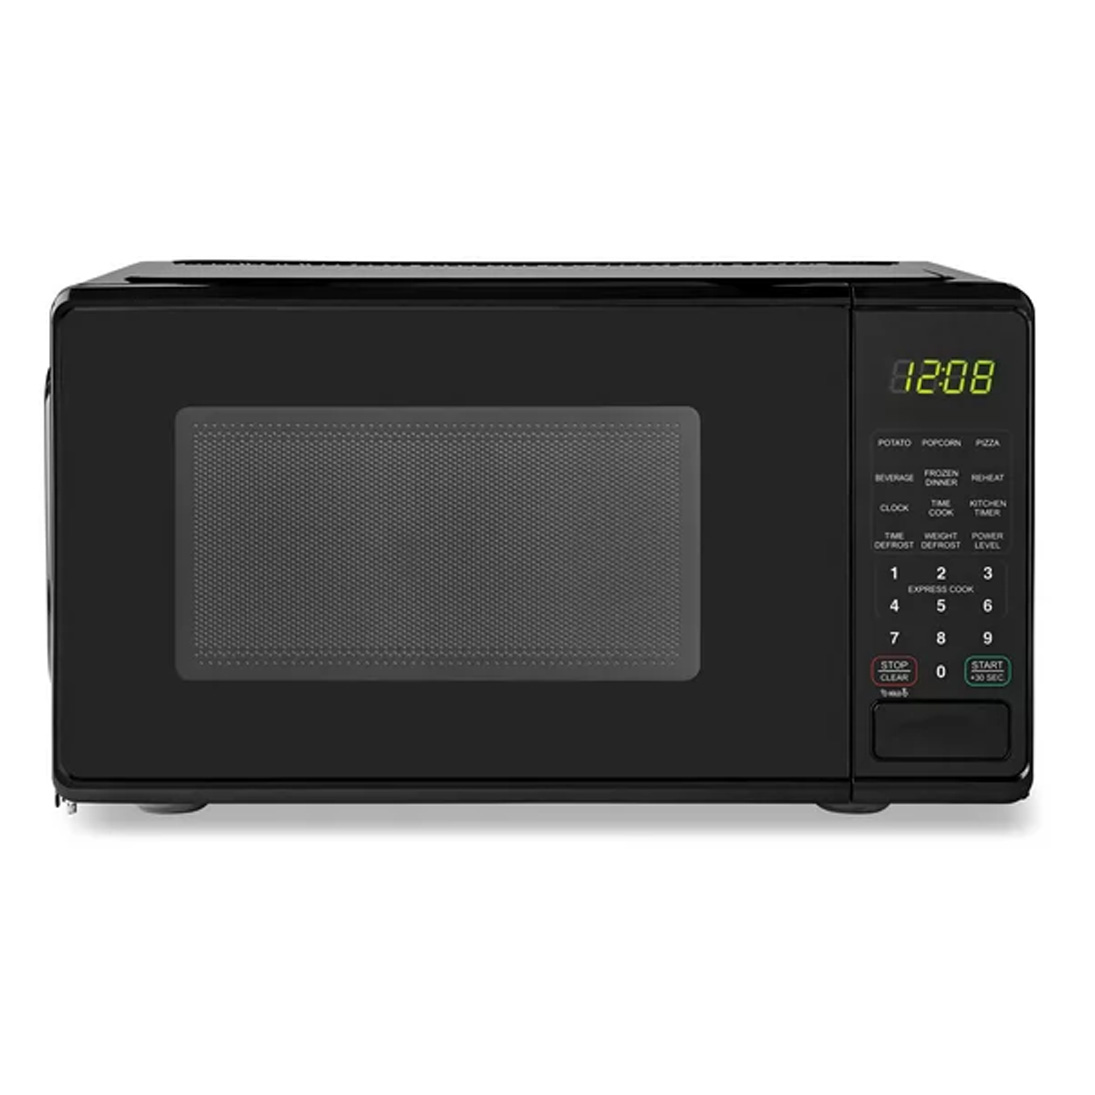 Countertop microwave oven in black 